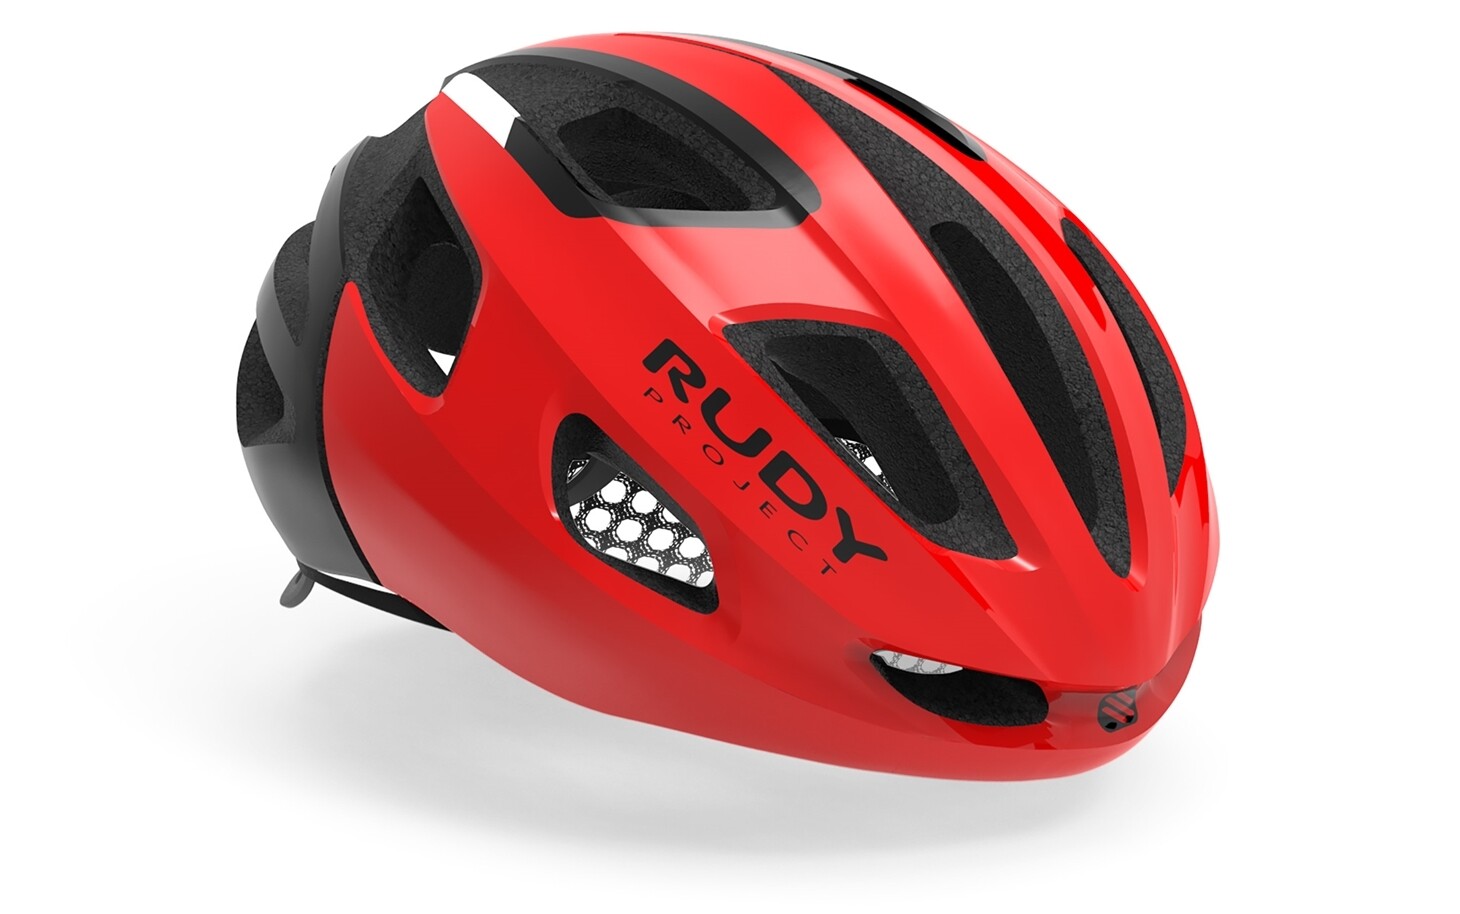 Rudy Project Strym Helmet